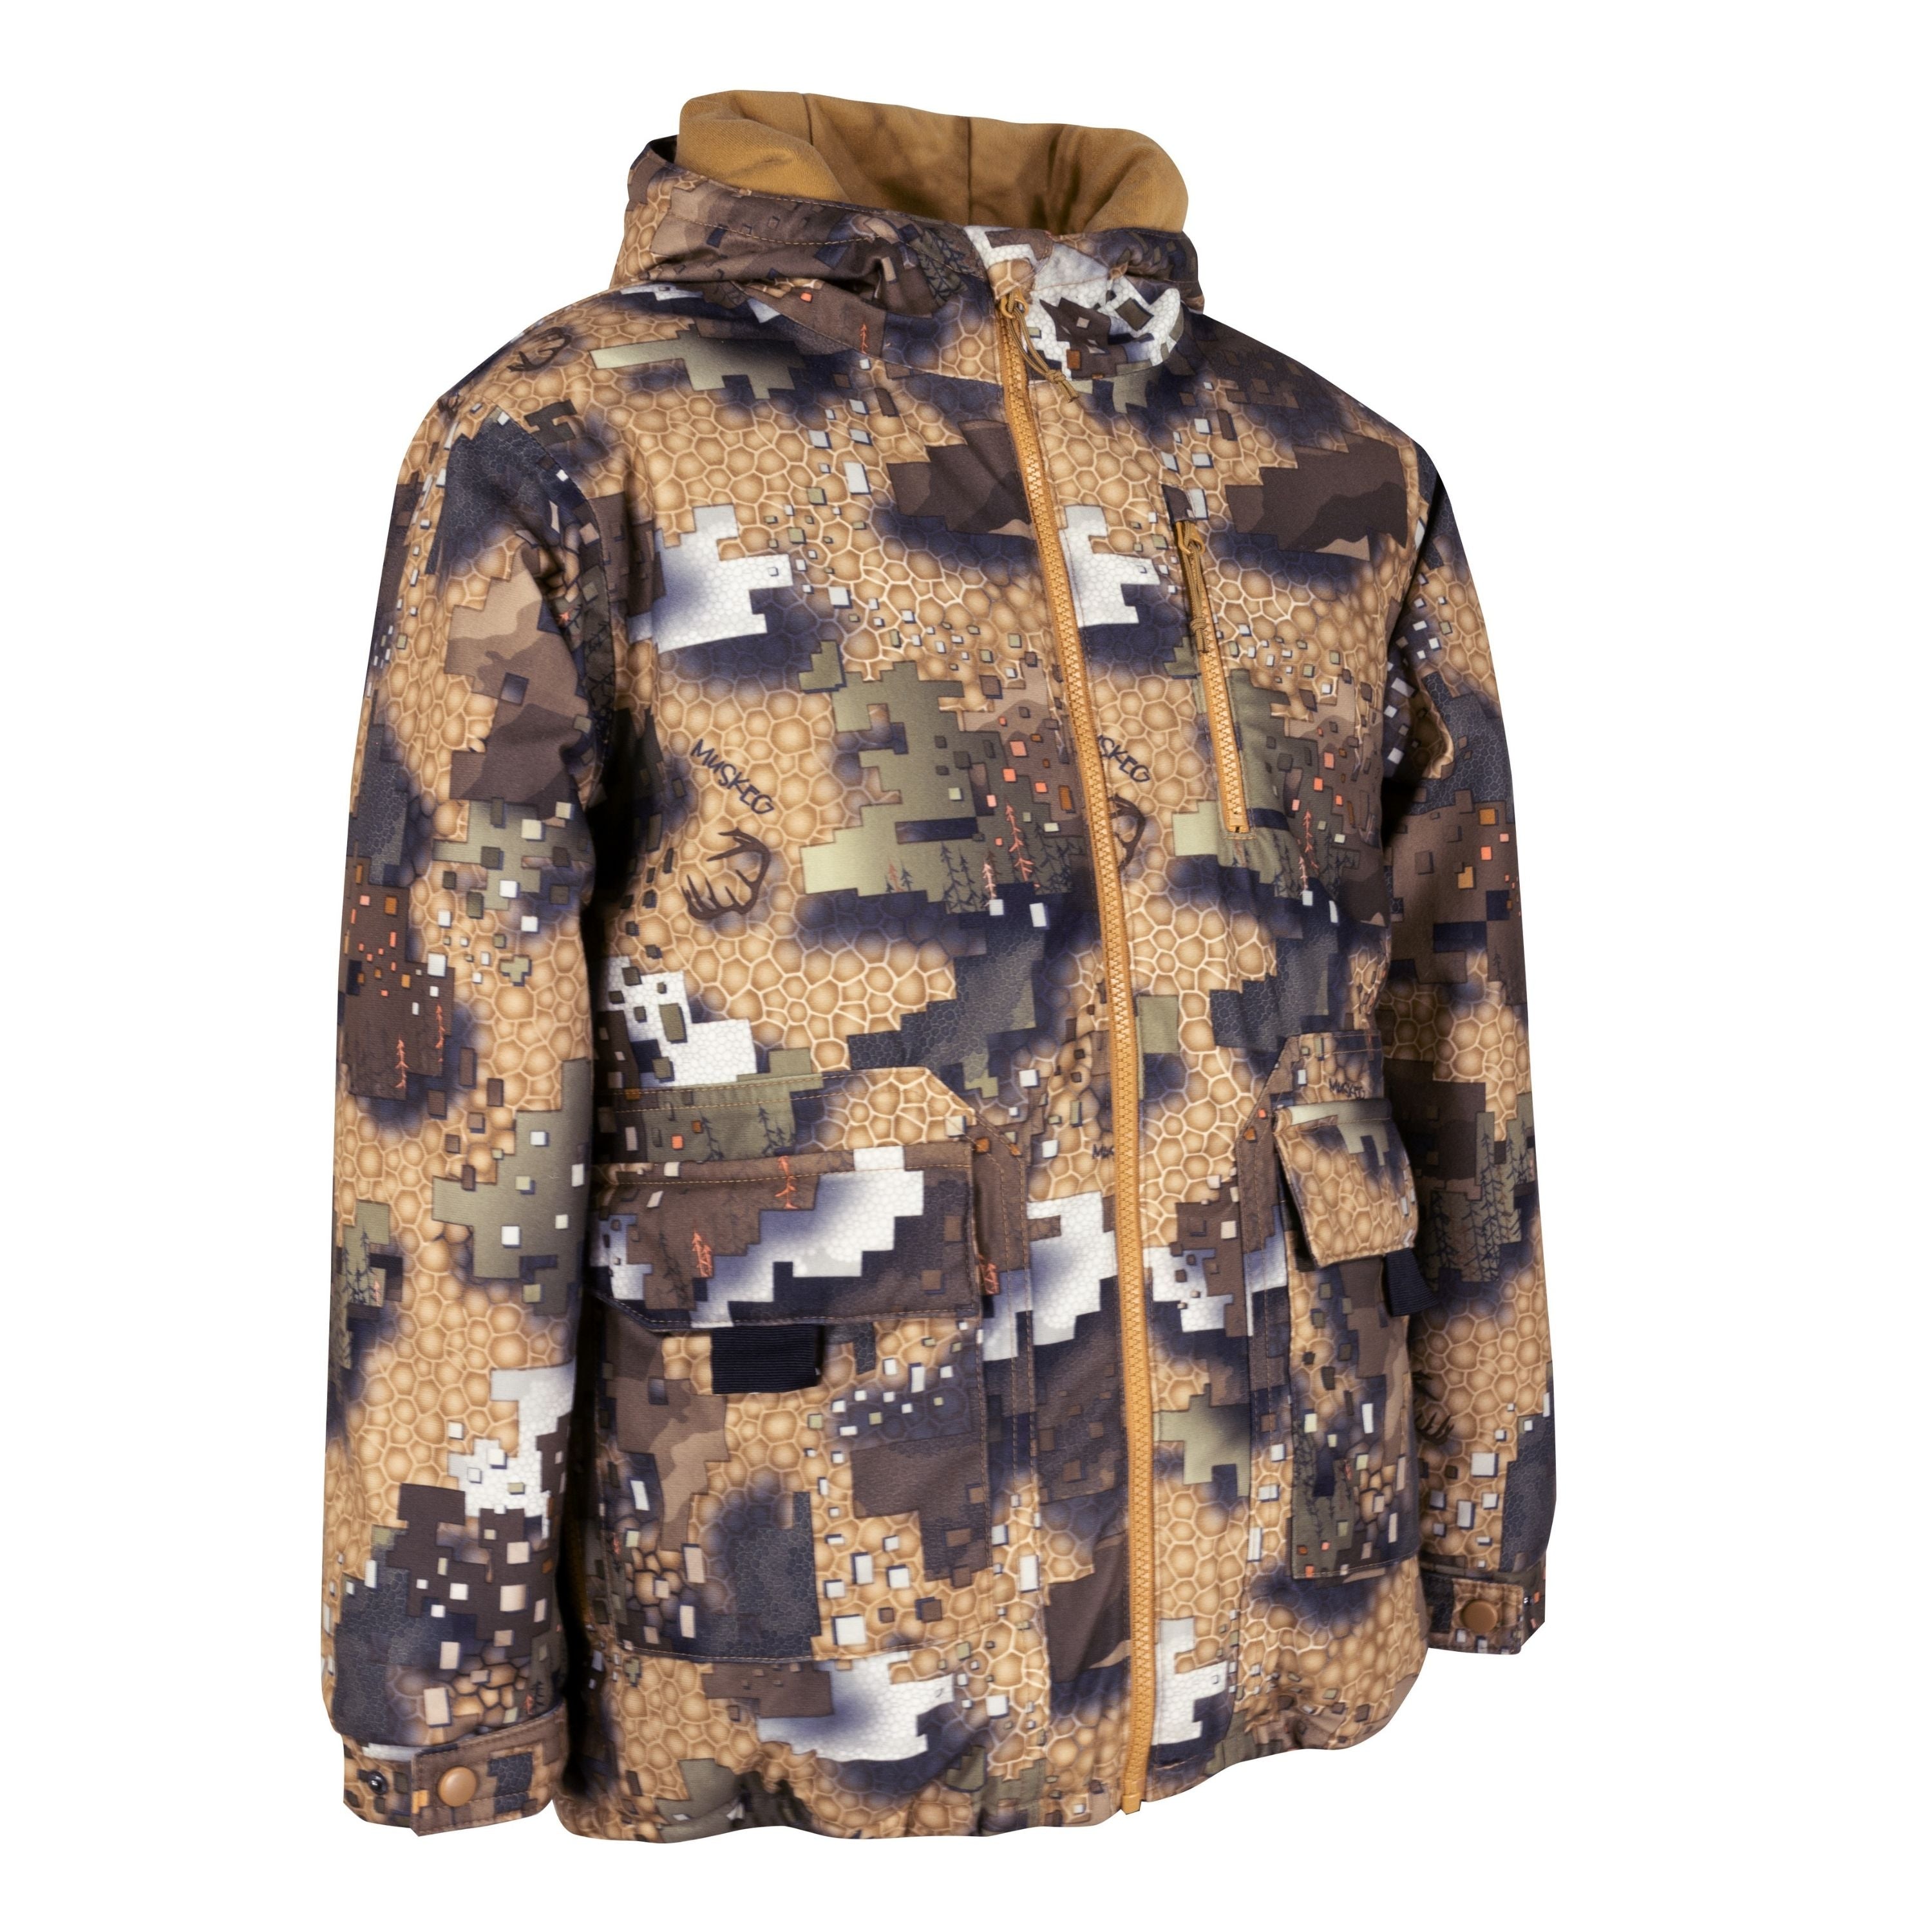 Manteau de chasse 3 en 1 - Homme||3-in-1 Hunting jacket - Men’s